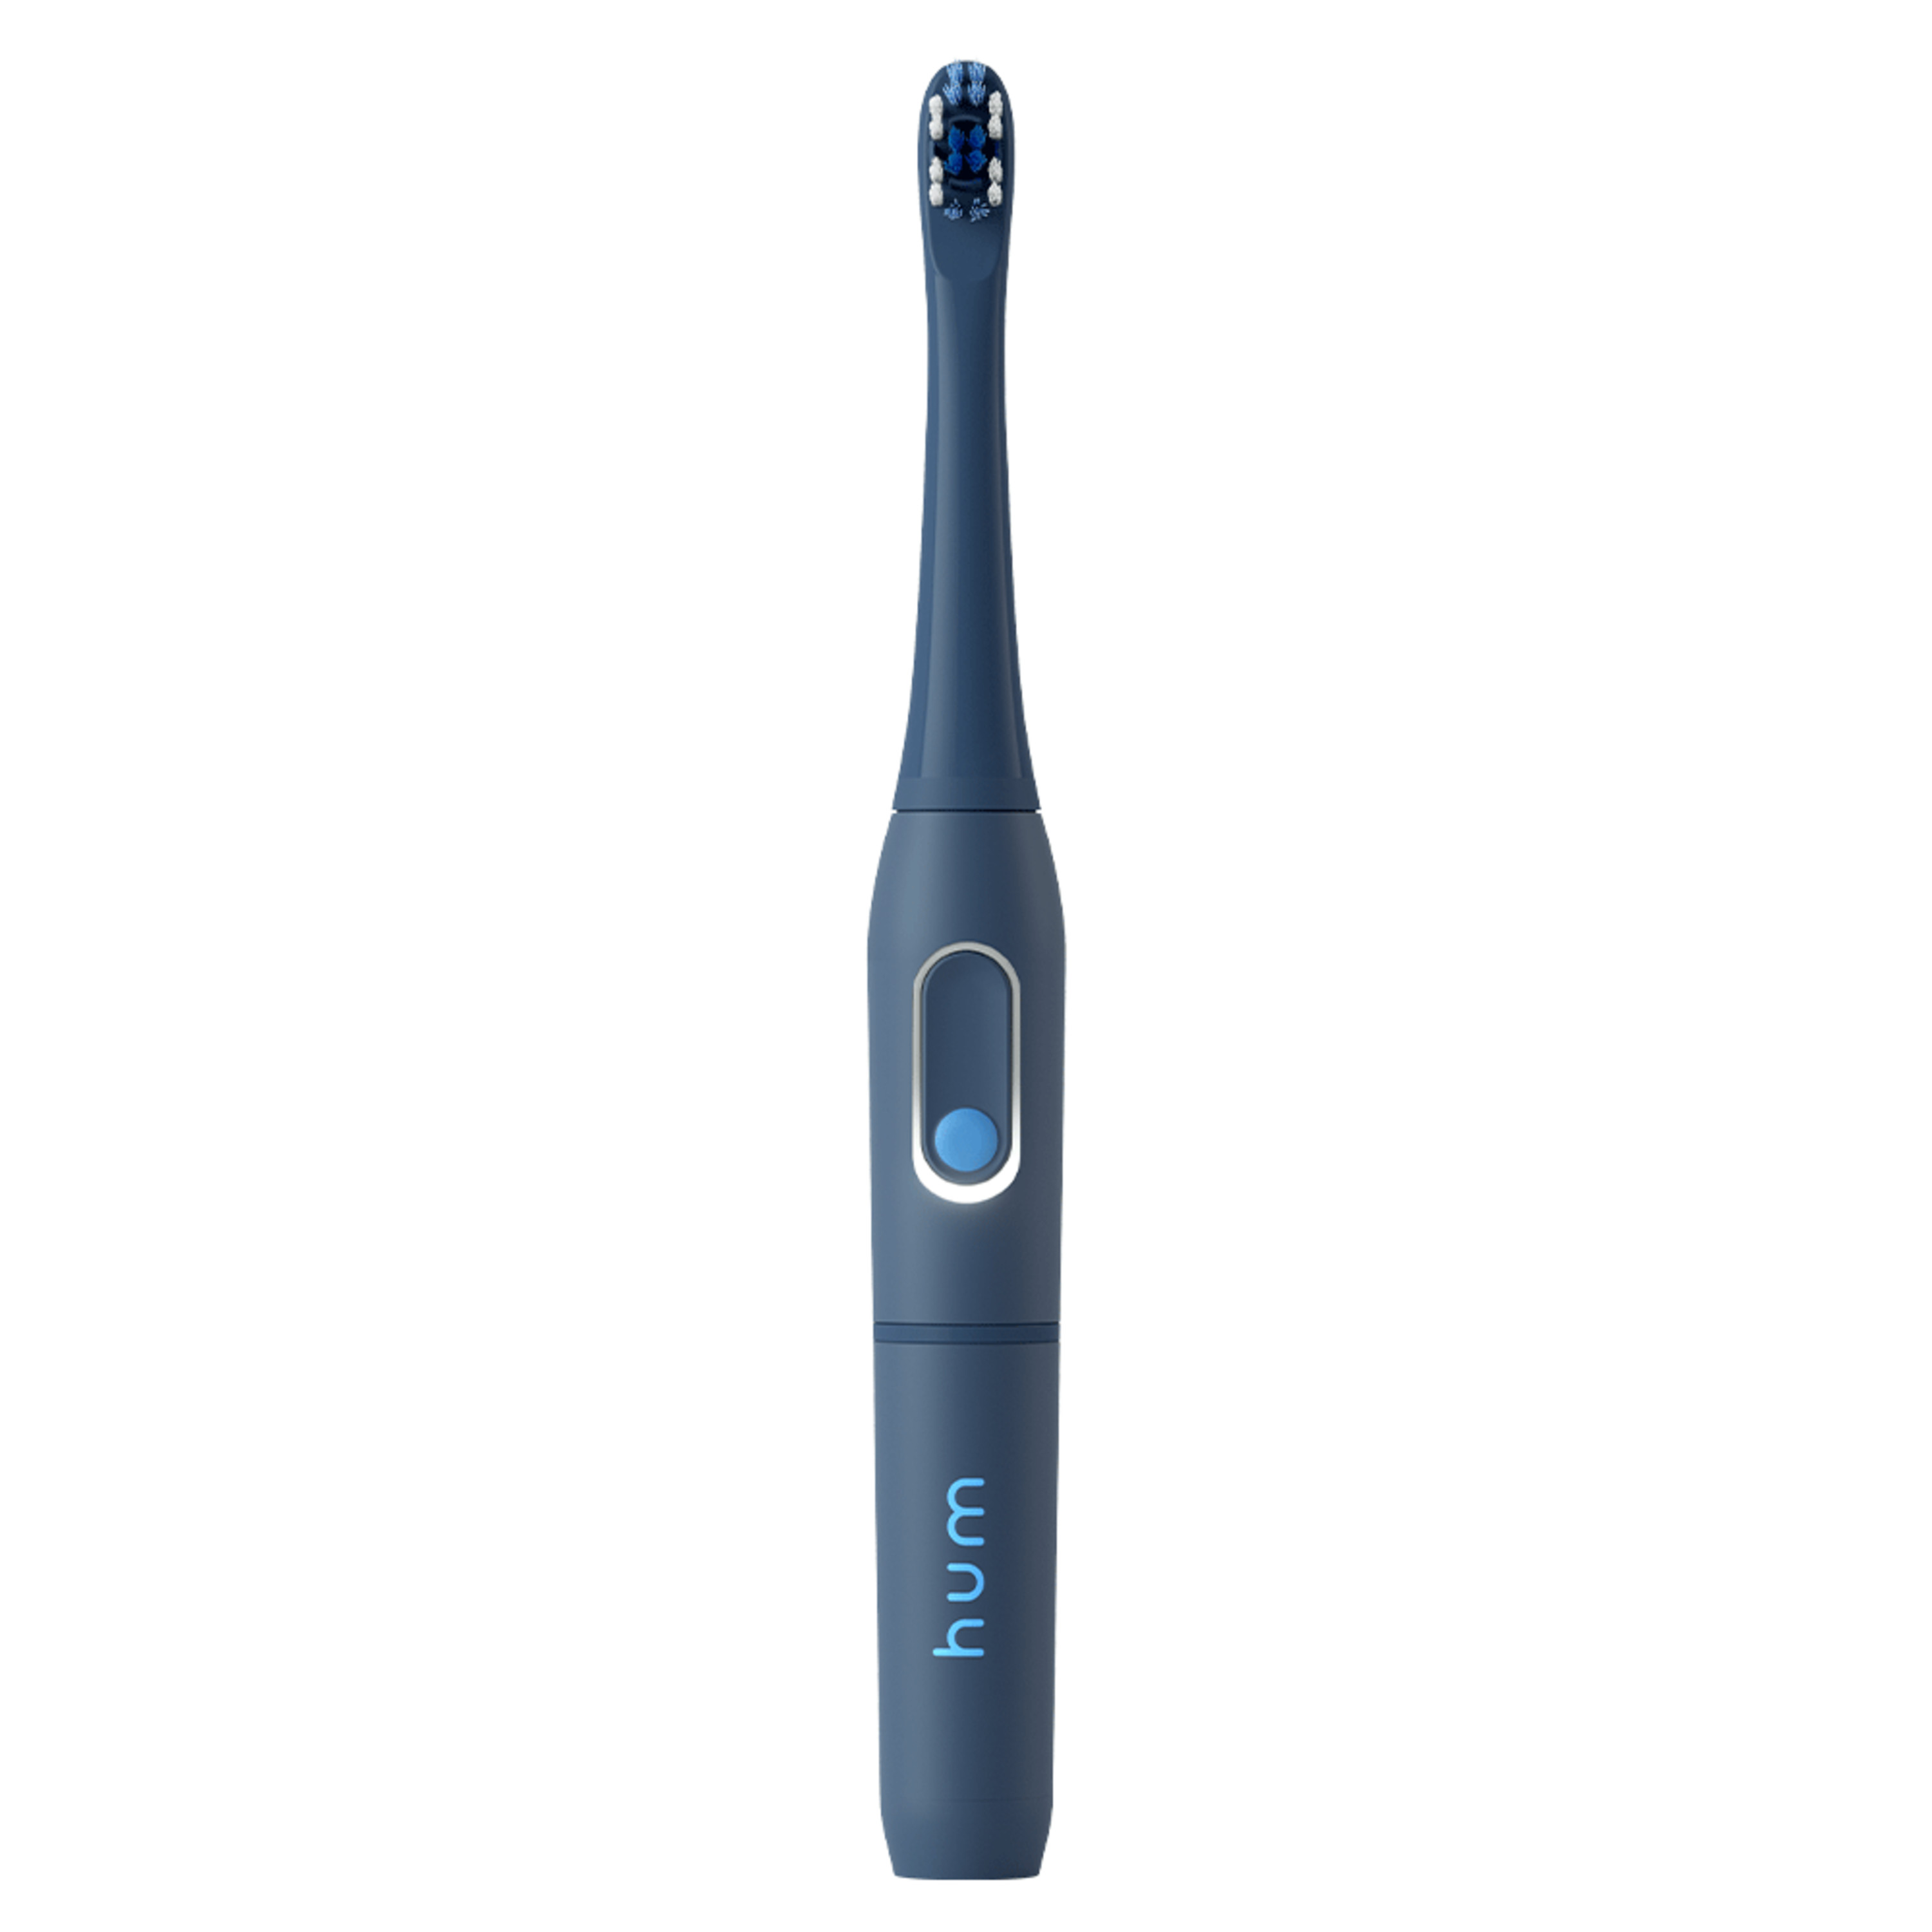 Hum by Colgate Smart Rhythm Sonic Adult Toothbrush Kit, Battery-Powered, Slate Grey - image 2 of 7